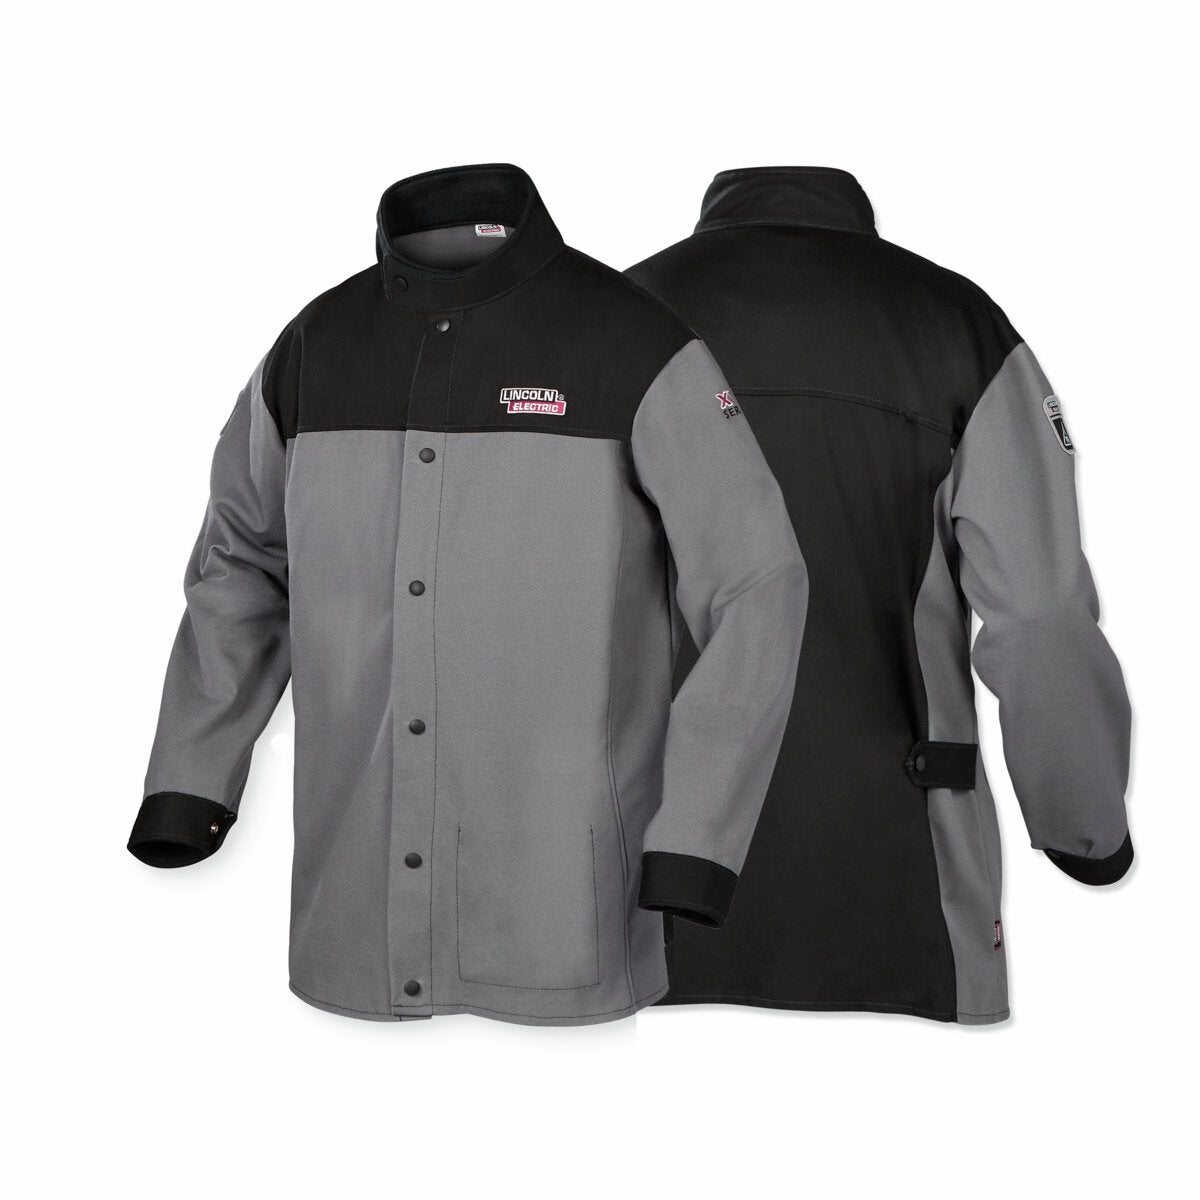 XVI Series Industrial FR Welding Jacket - 2XL